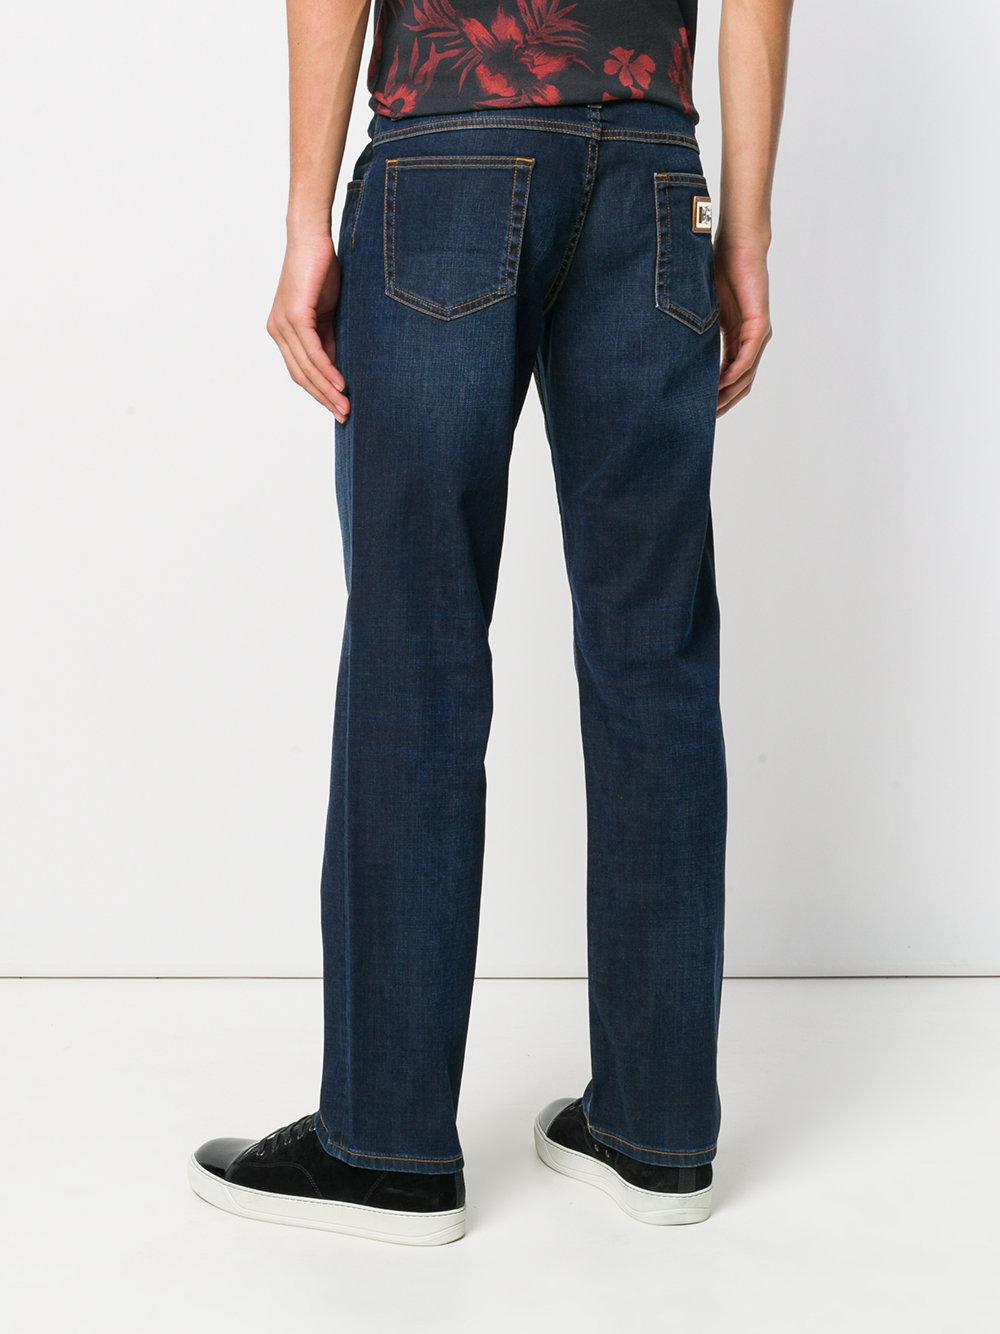 Dolce & Gabbana Denim Bootcut Jeans in Blue for Men - Lyst